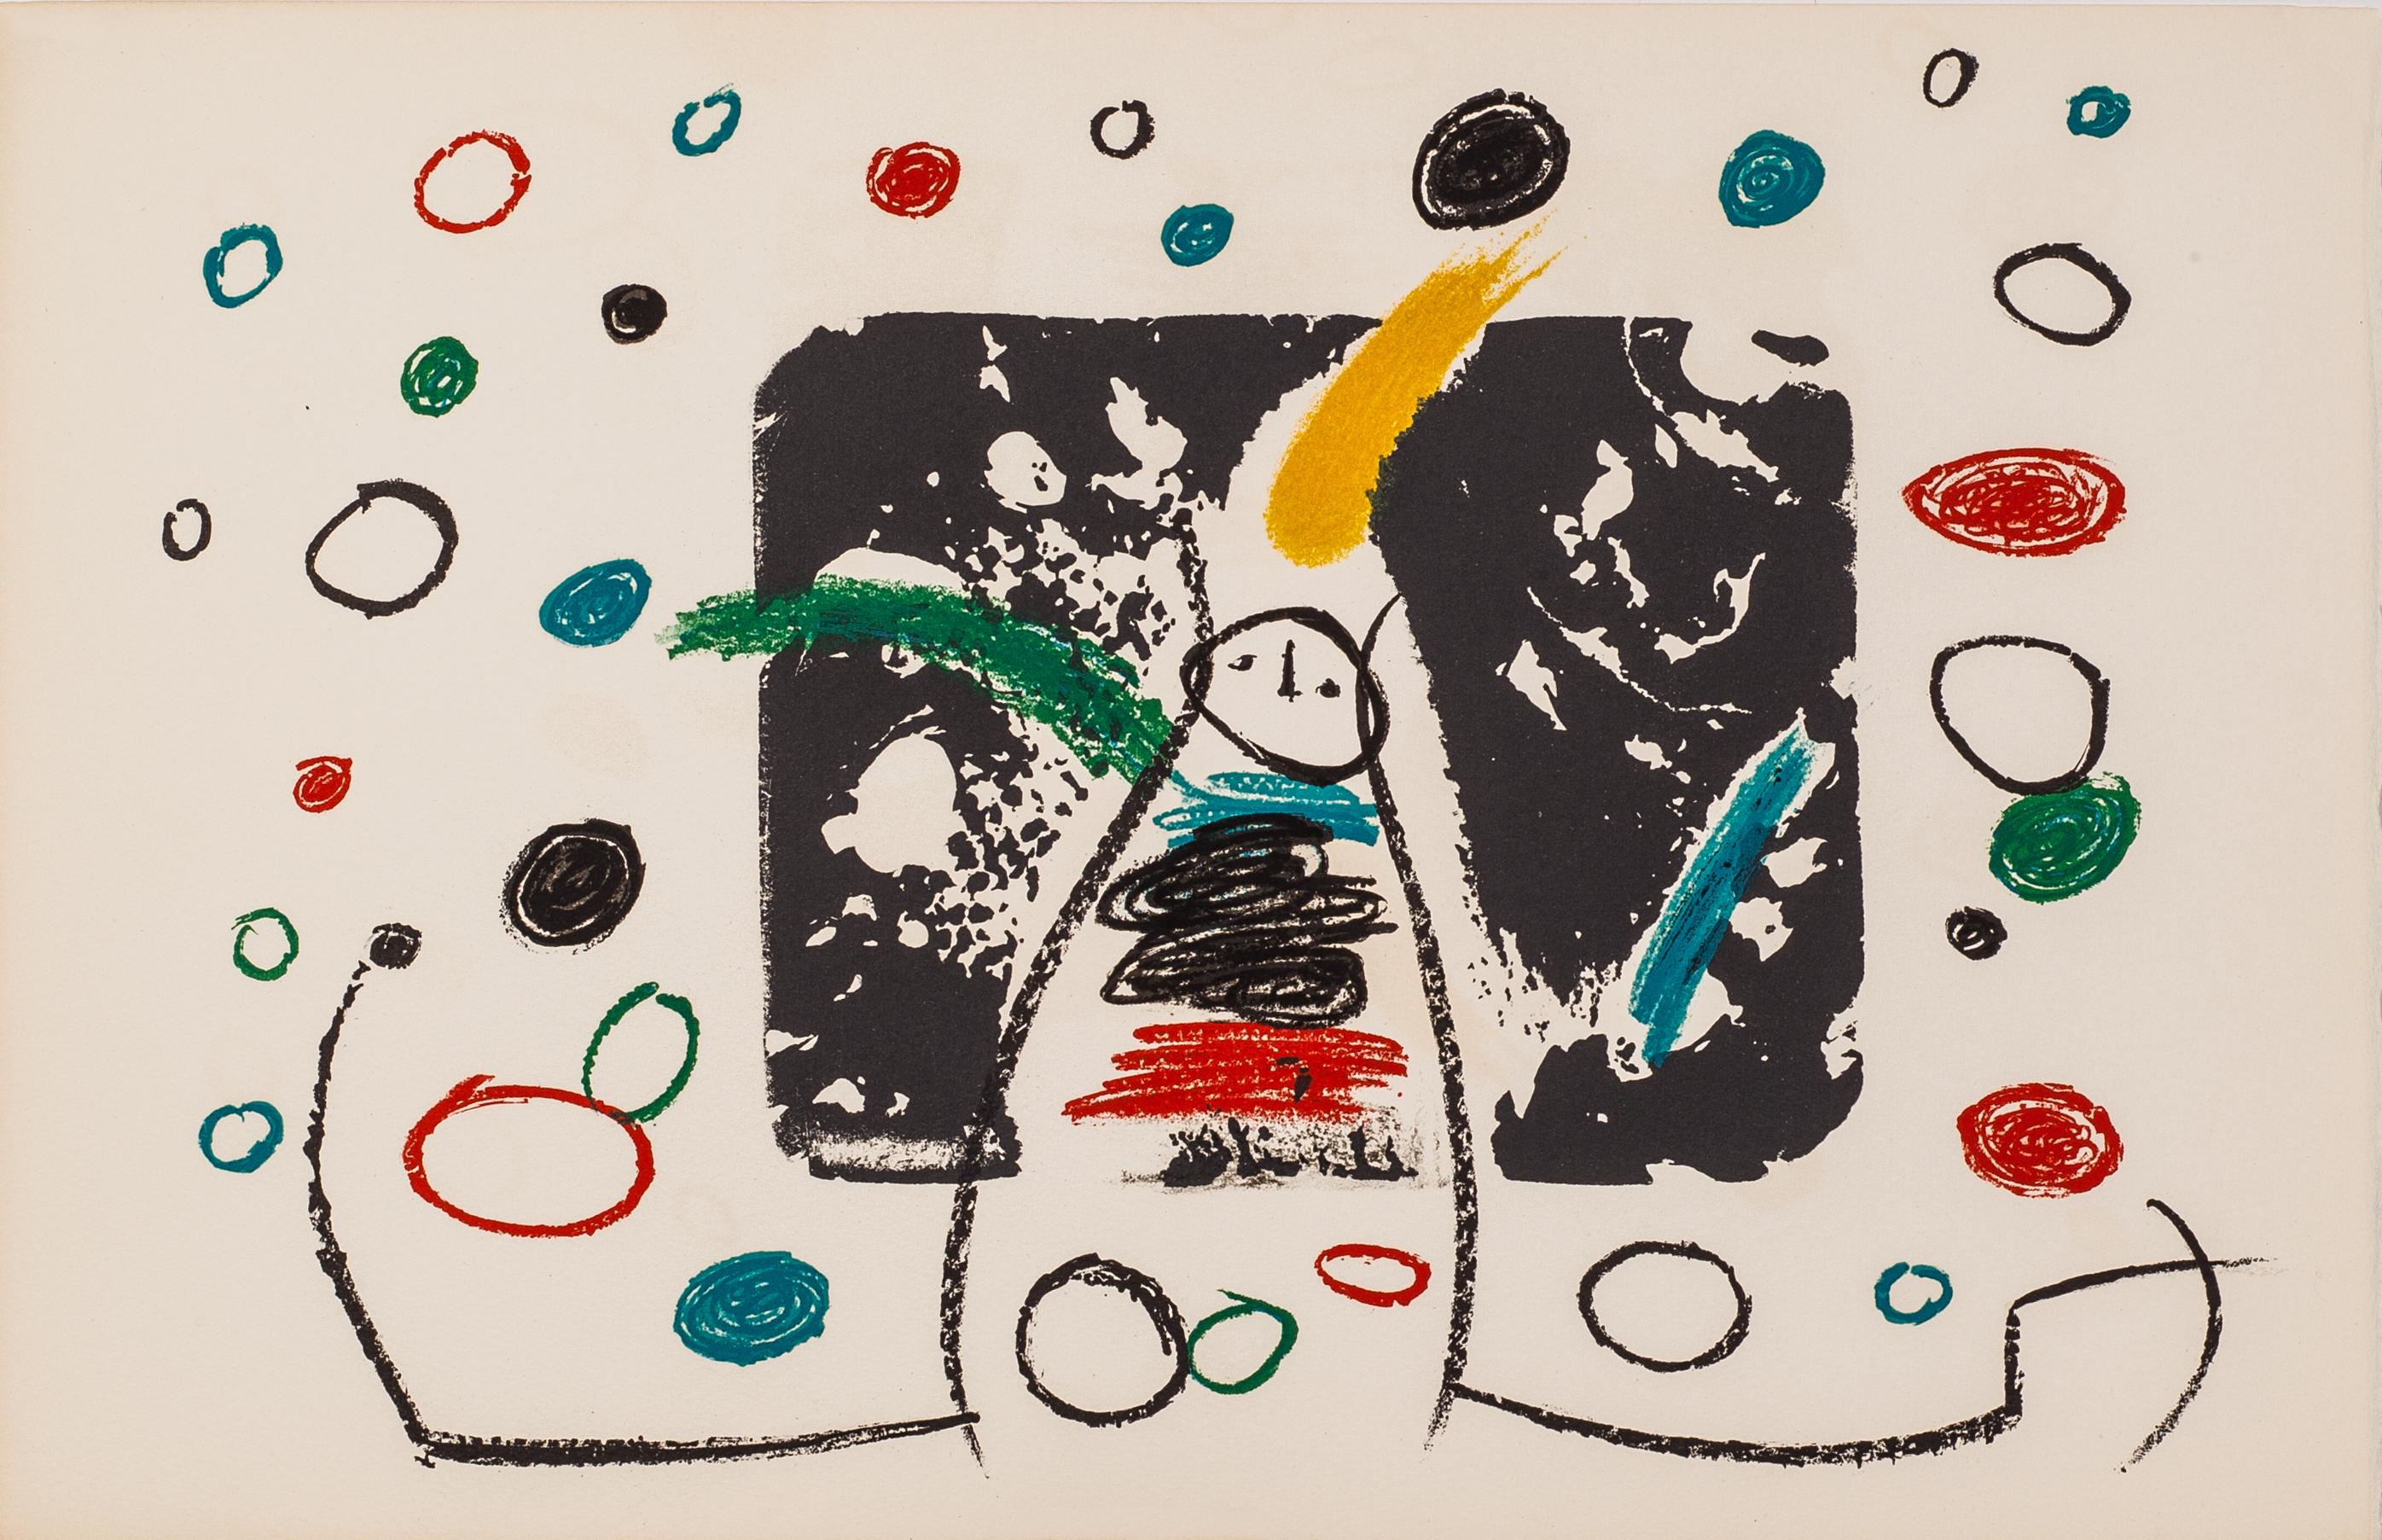 Joan Miró Abstract Print - L'enfance d'Ubu: 999 by Joan Miro - Abstract 